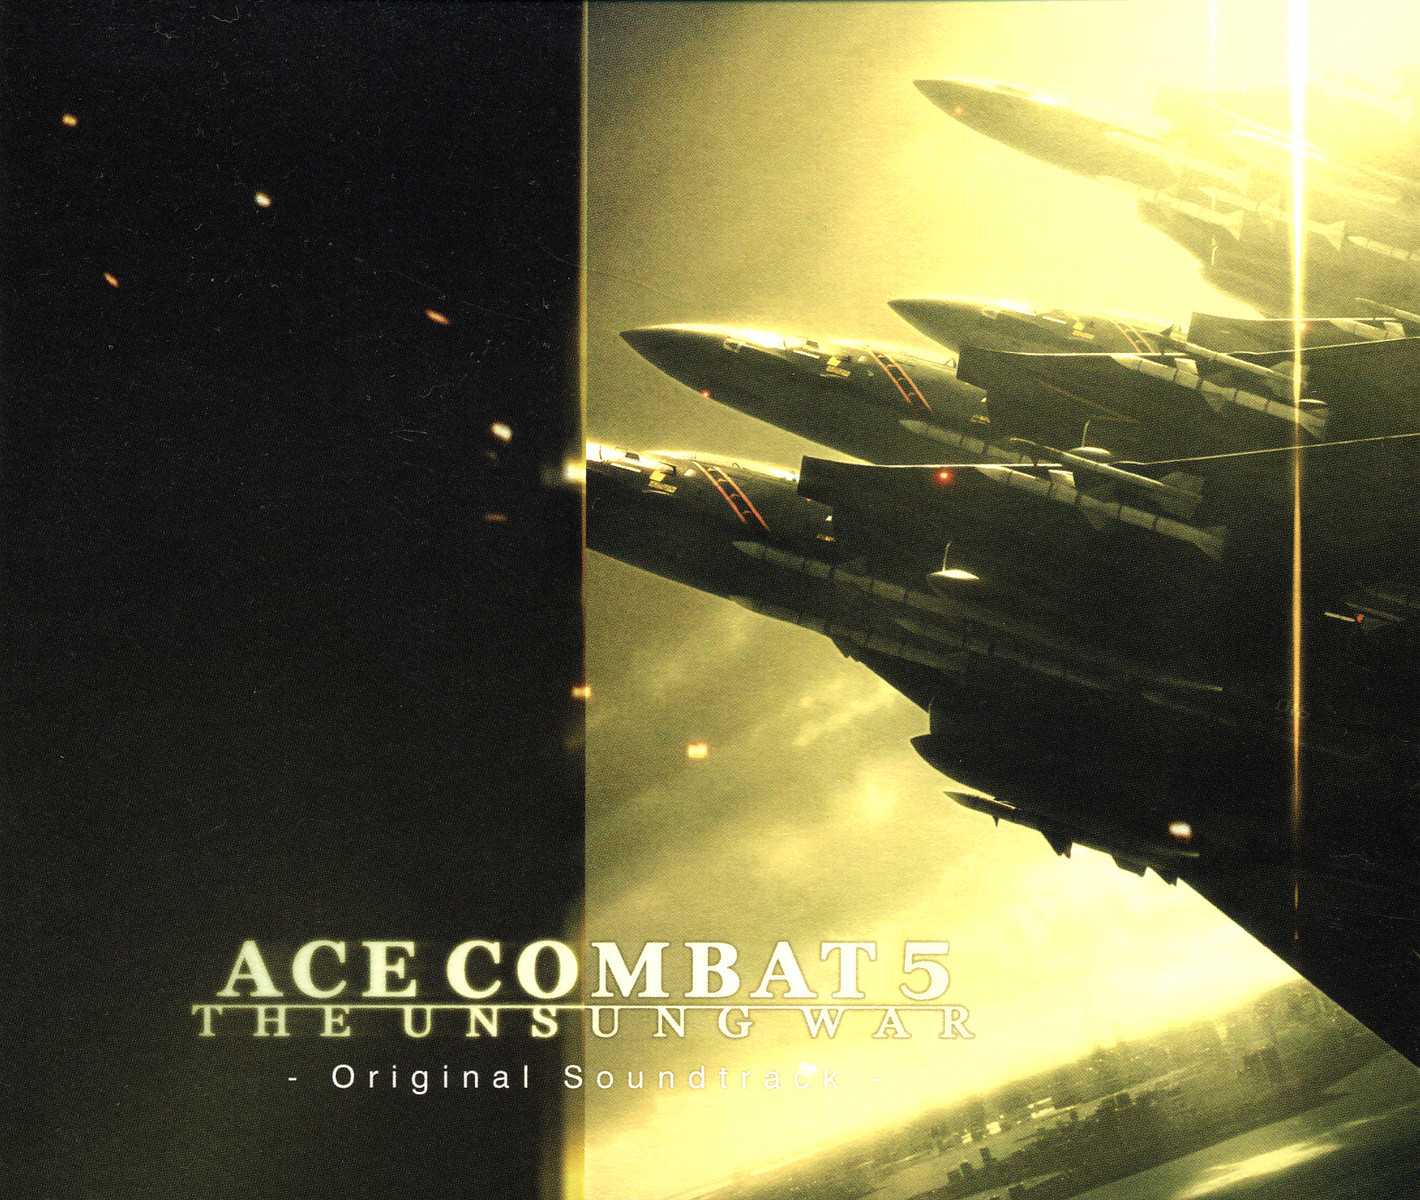 ace combat 3 for psx